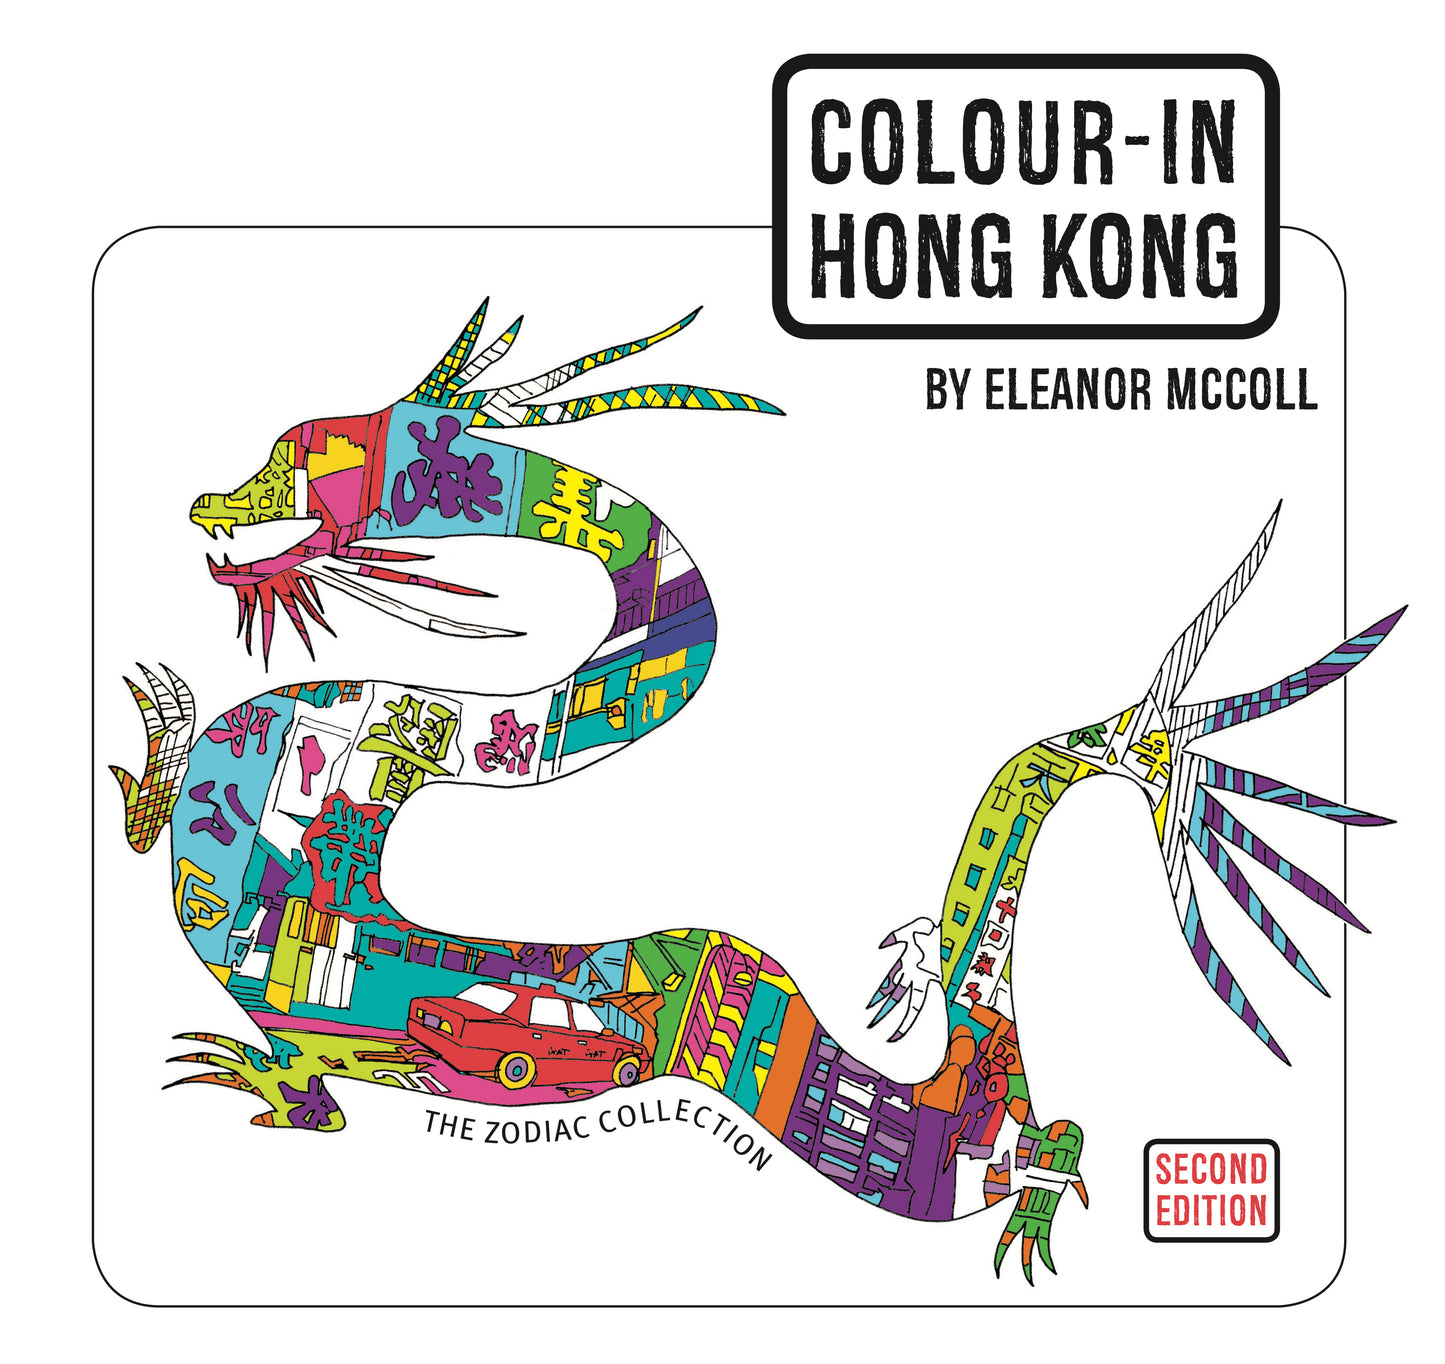 Colour-in Hong Kong